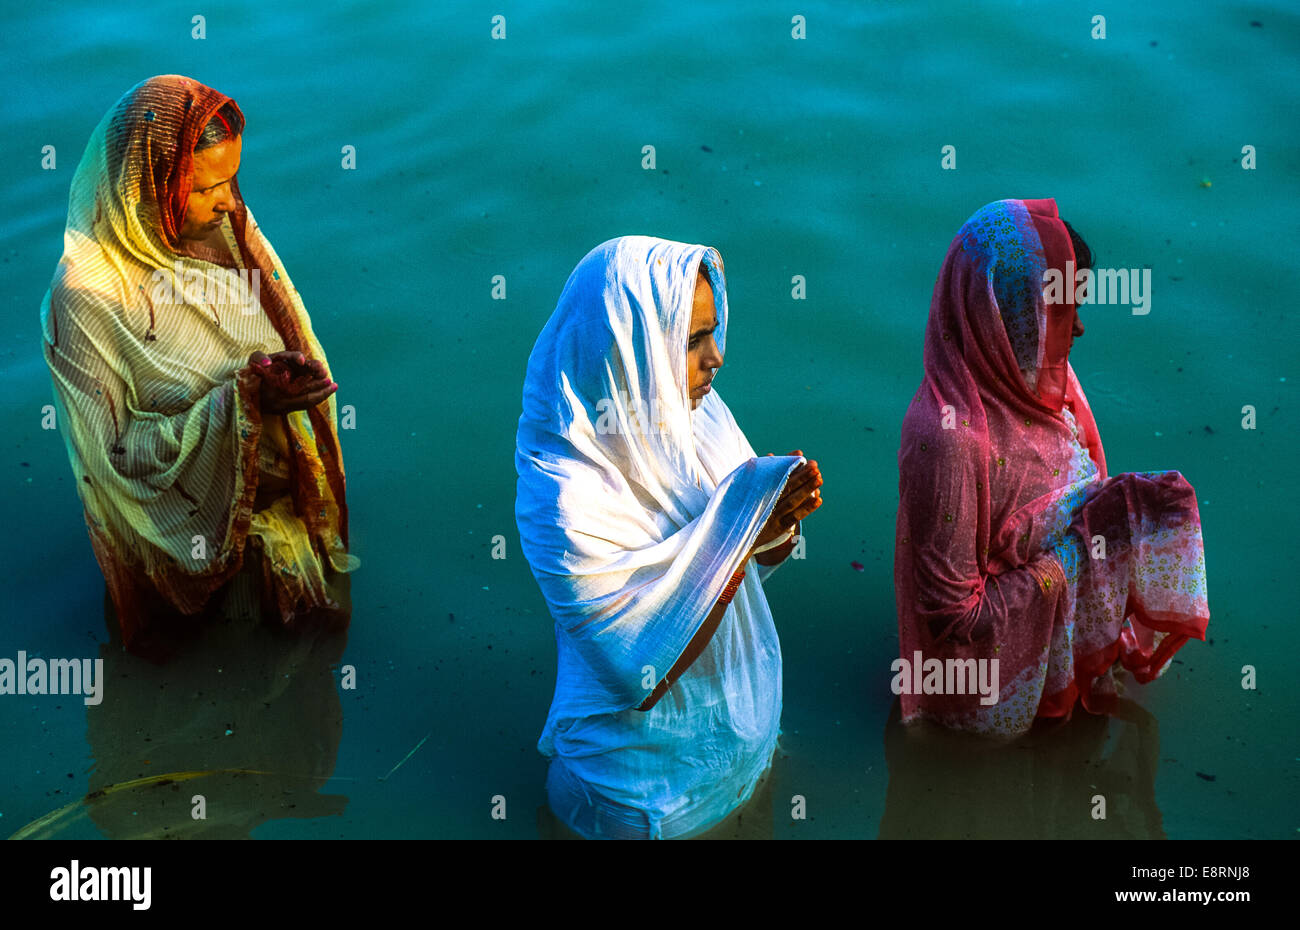 pregnant women pray for boy in holy ganga river at varanasi / banares in india Stock Photo